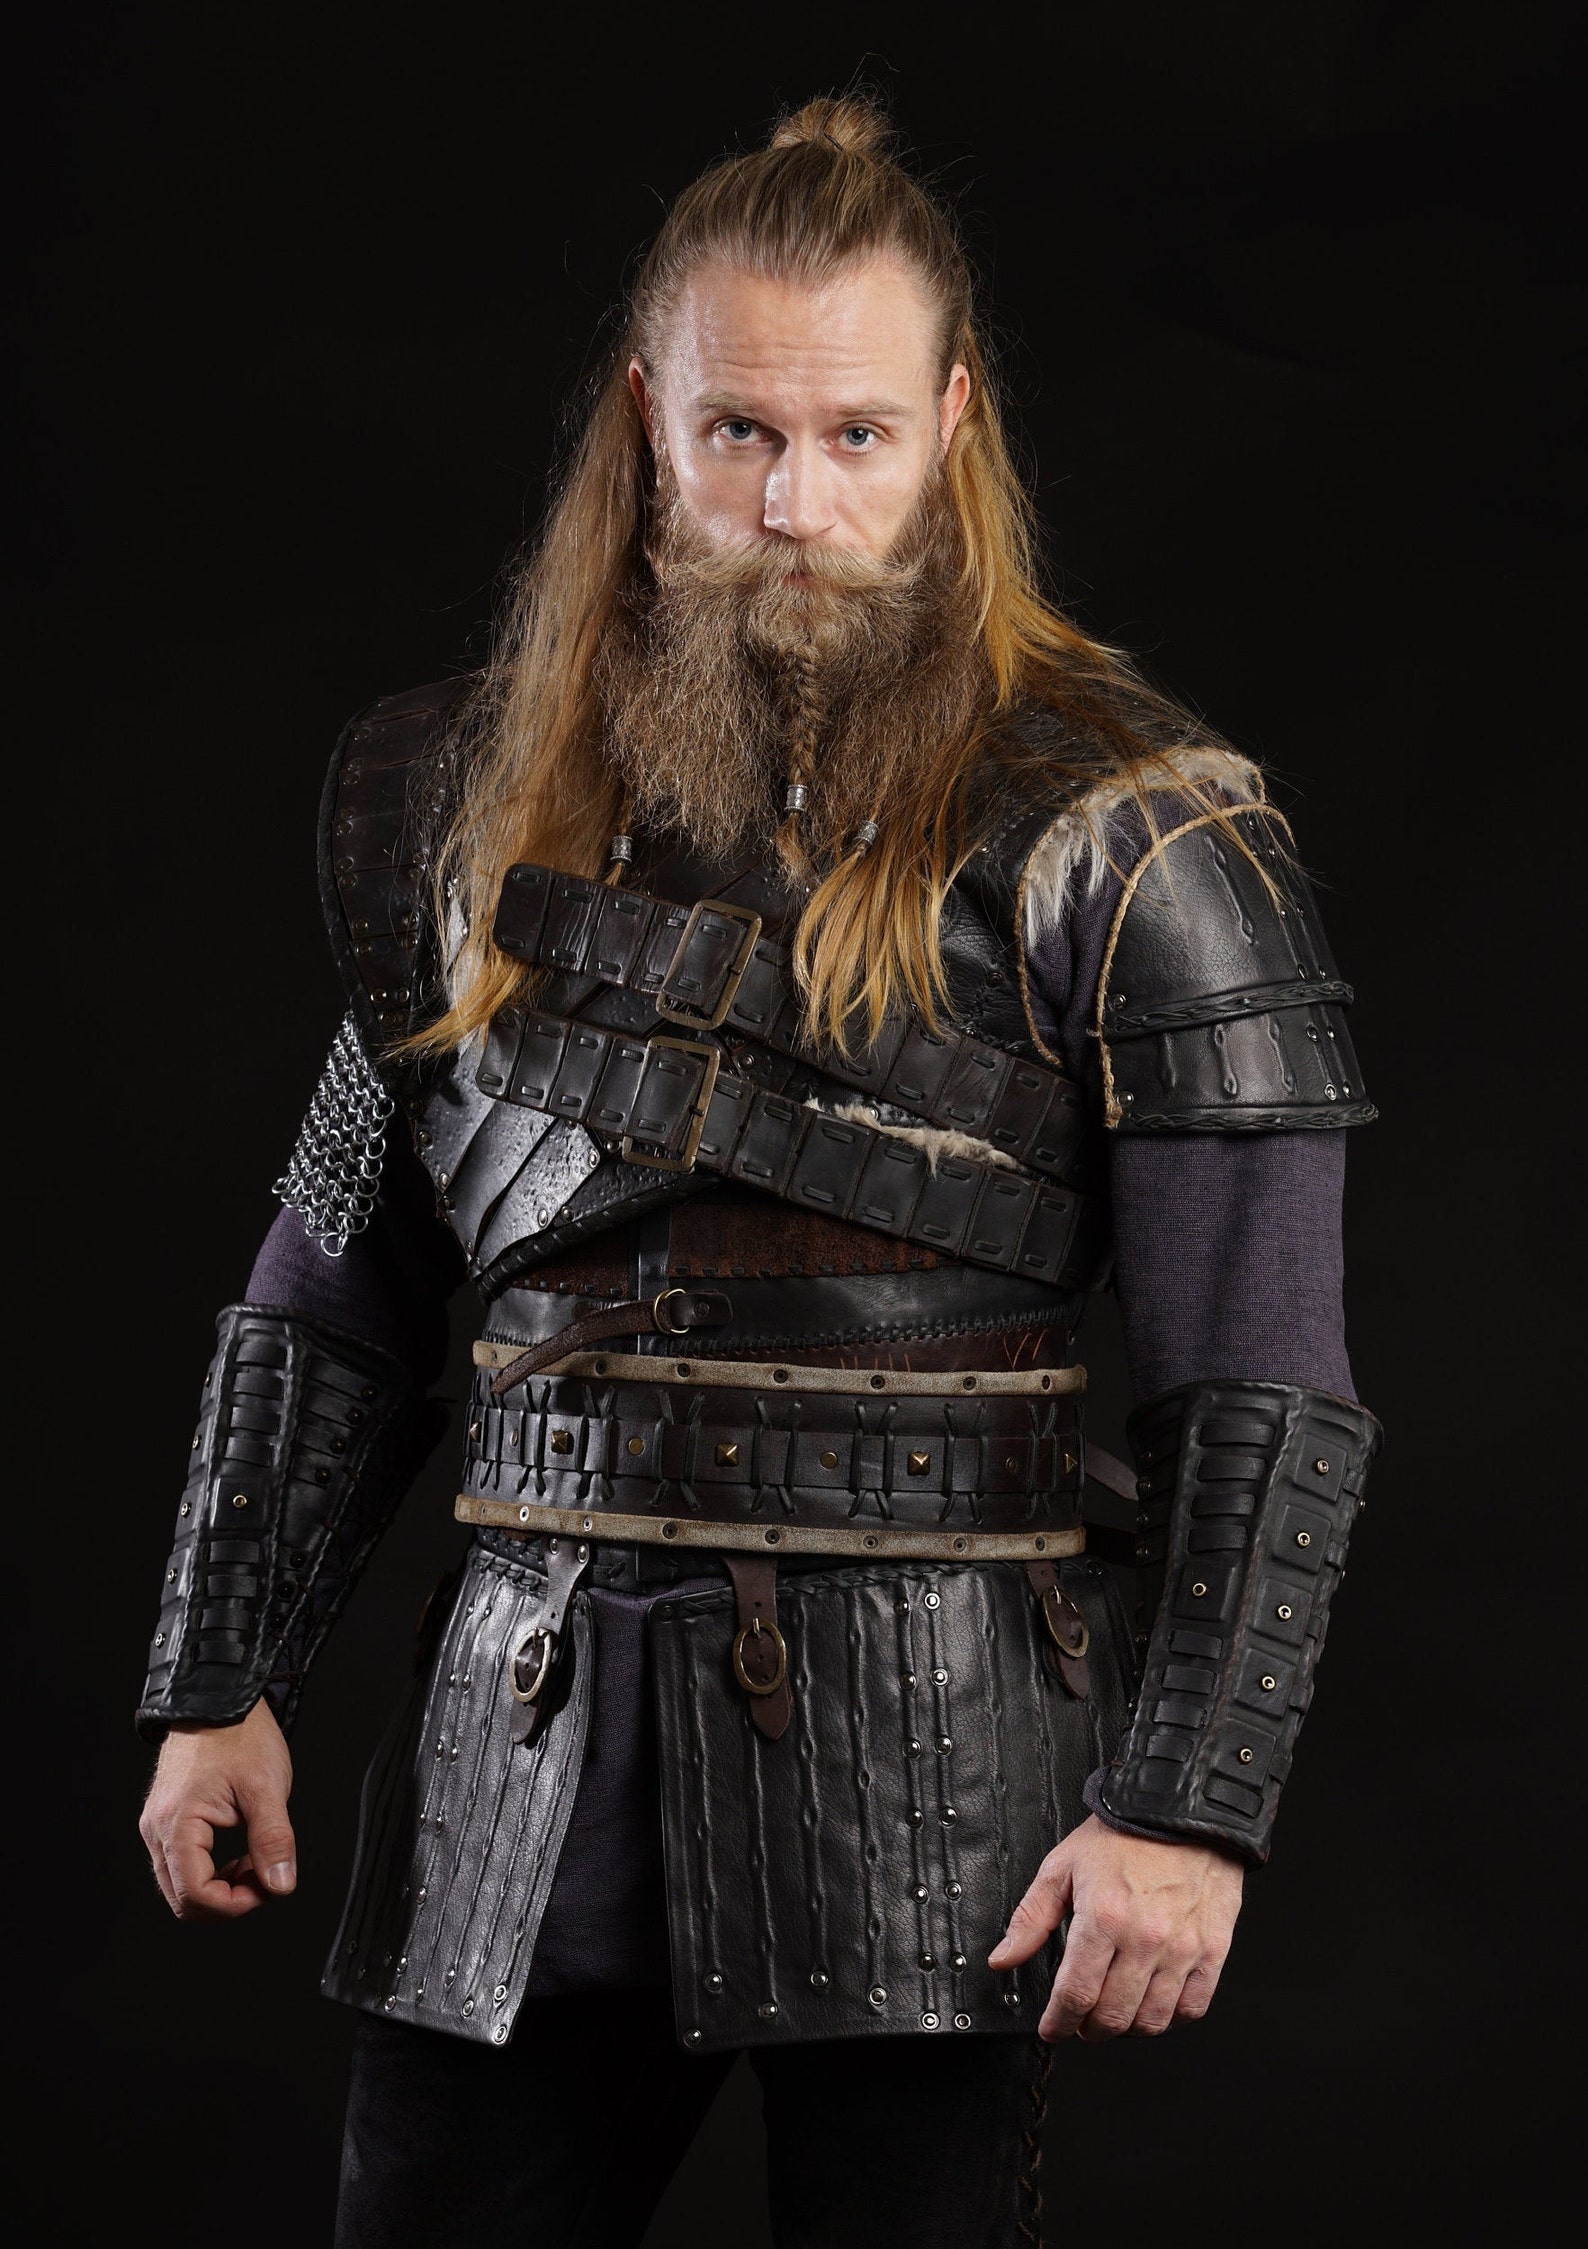 Ivar The Boneless armor from Vikings season 4 exact copy | Etsy